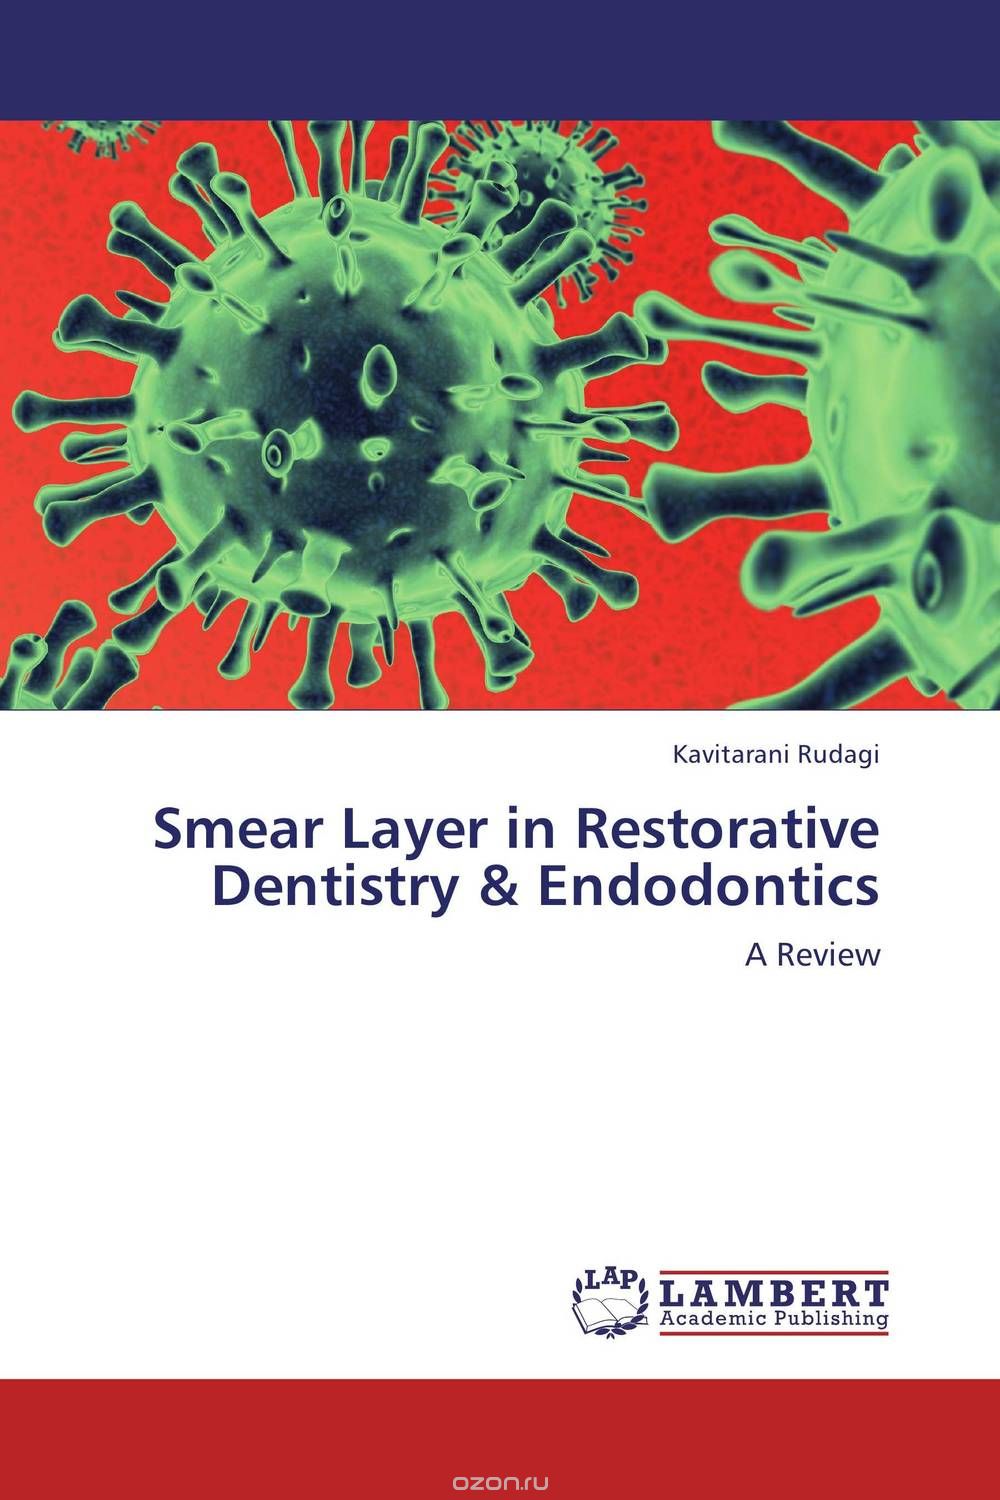 Скачать книгу "Smear Layer in Restorative Dentistry & Endodontics"